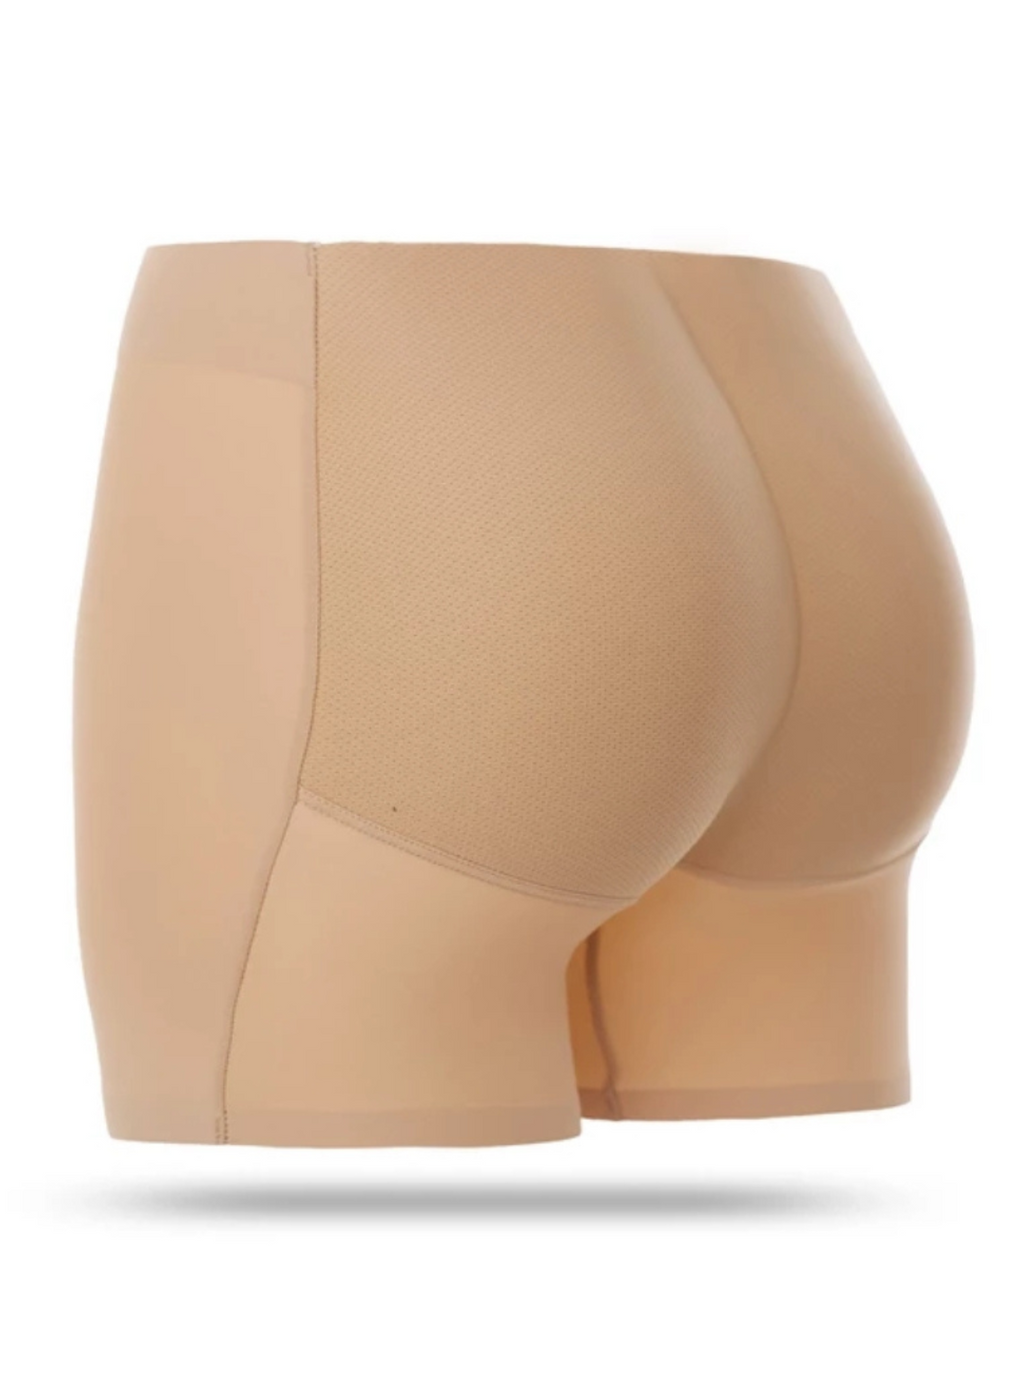 Kleo Butt Lifter Safety Shorts Panties Seamless Padded Underwear